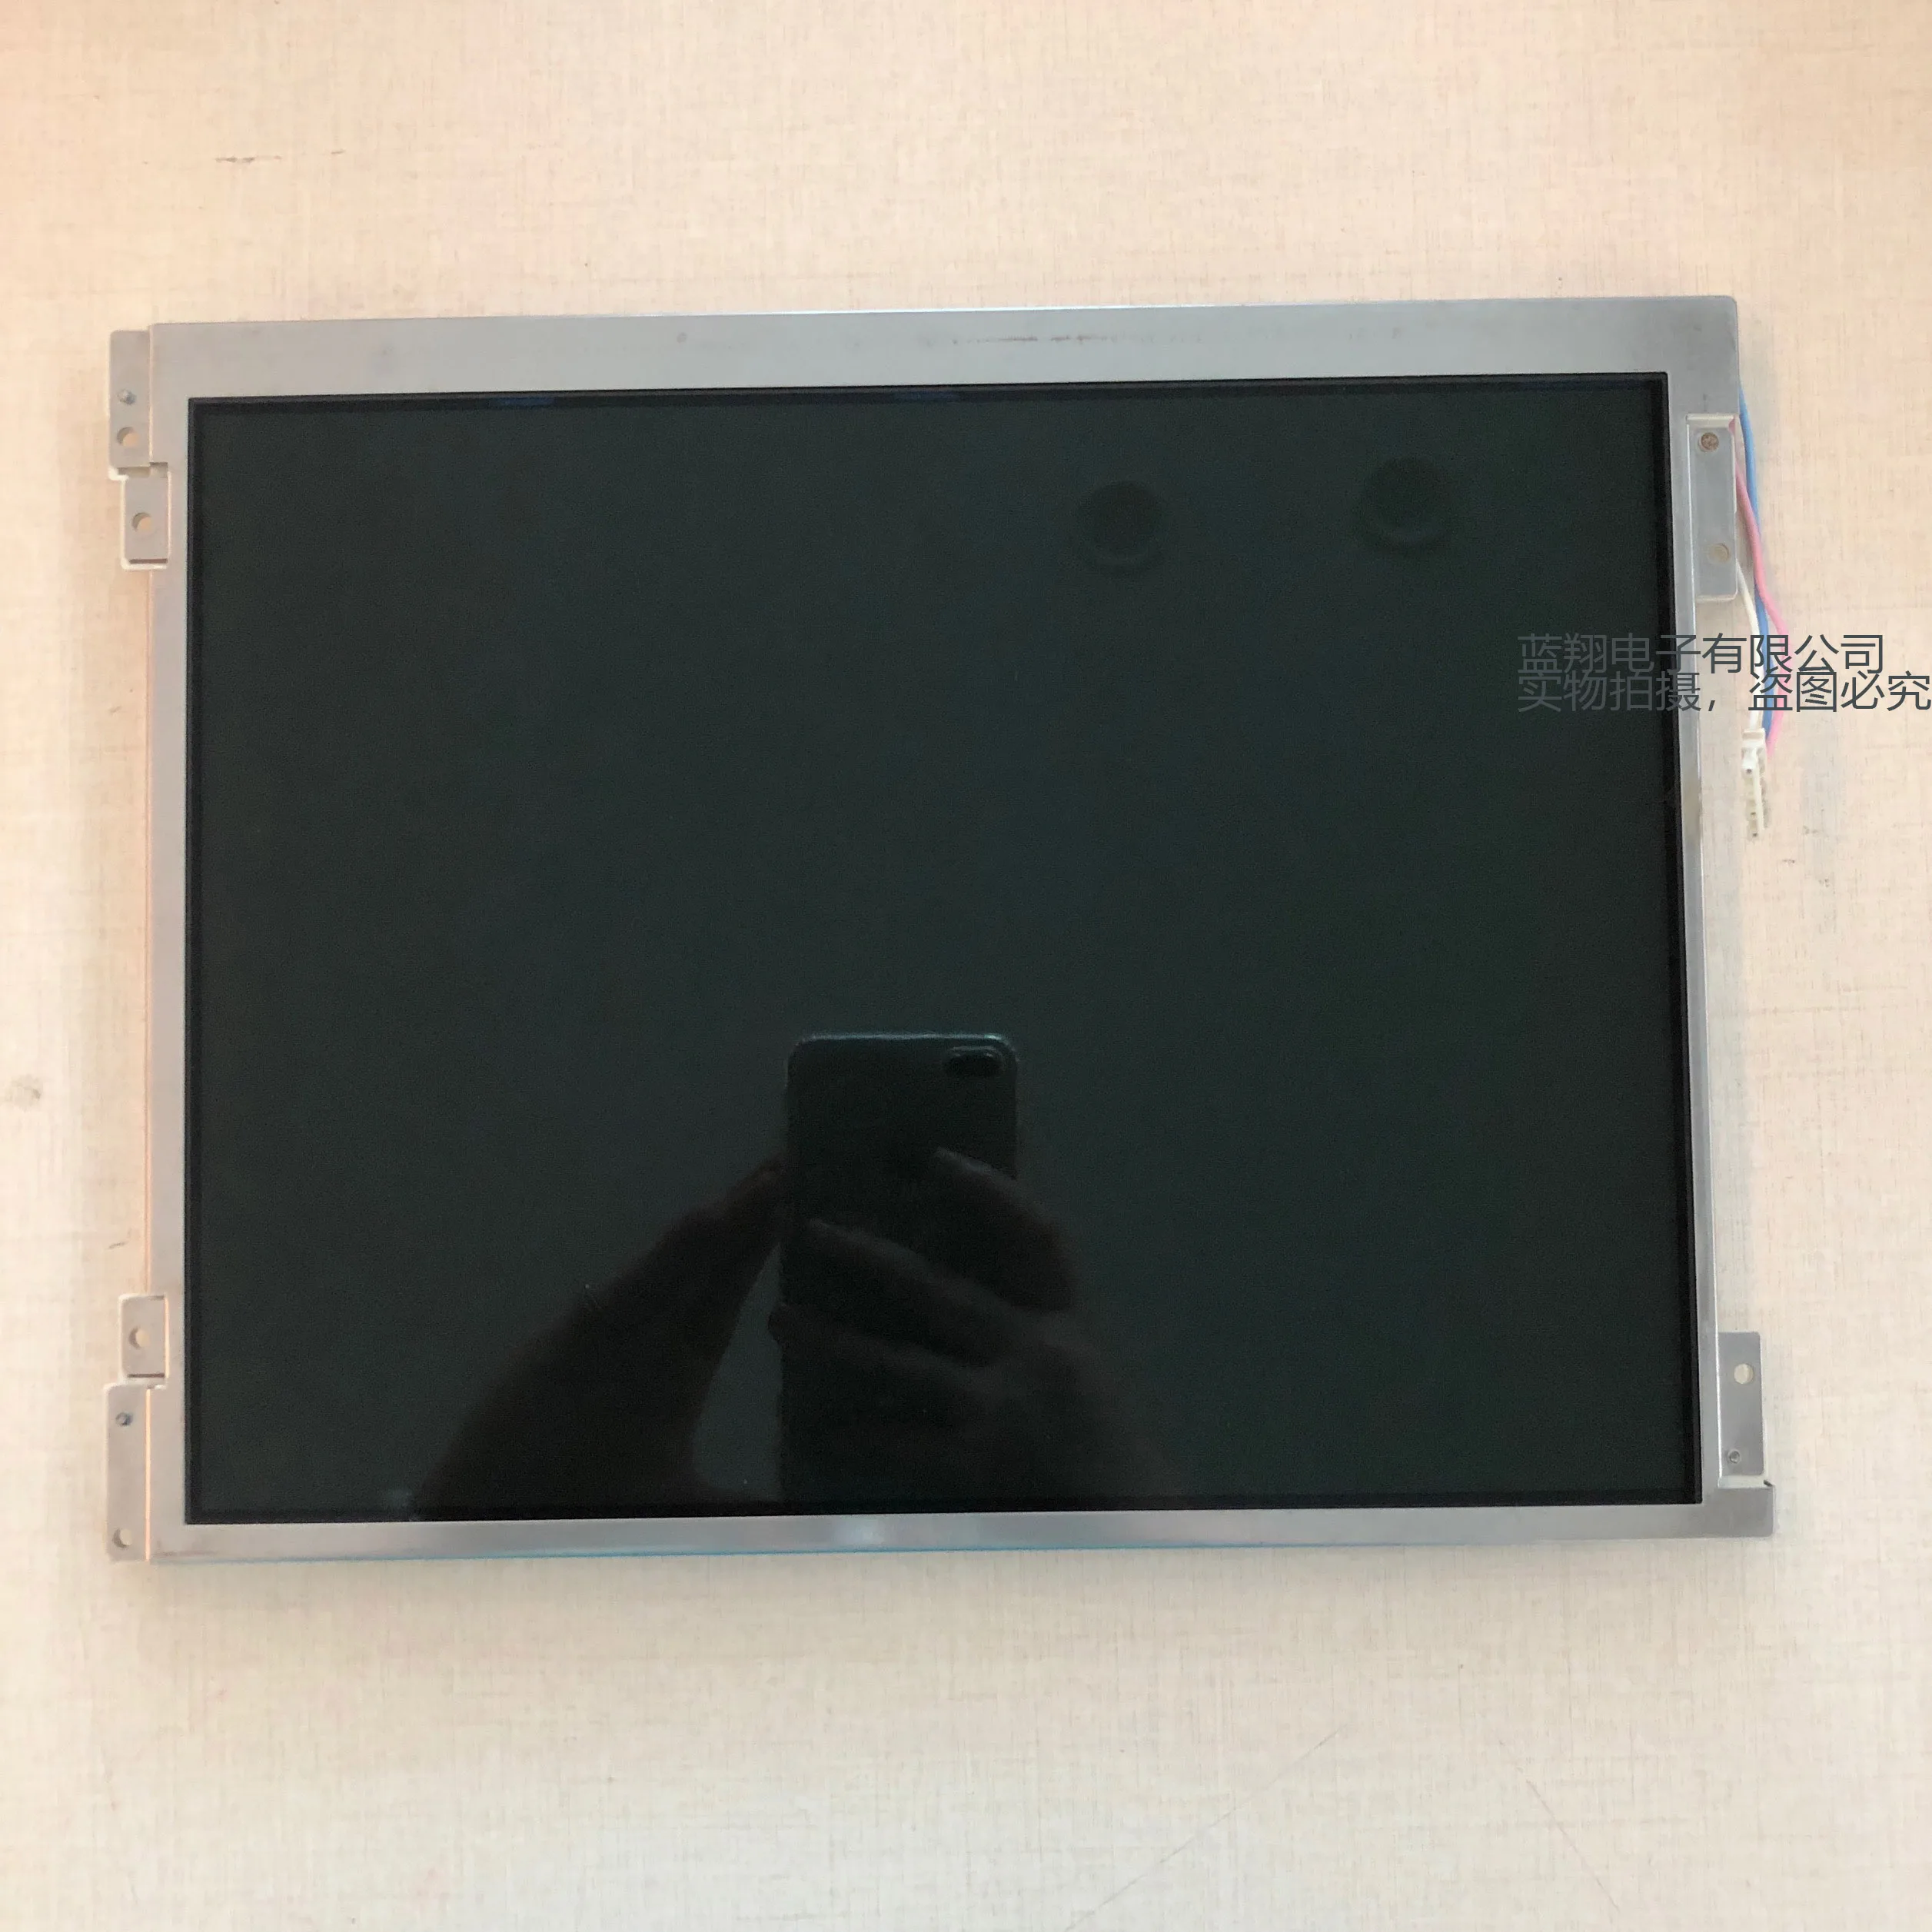 Original 12.1-inch LCD panel LTD121GA0S